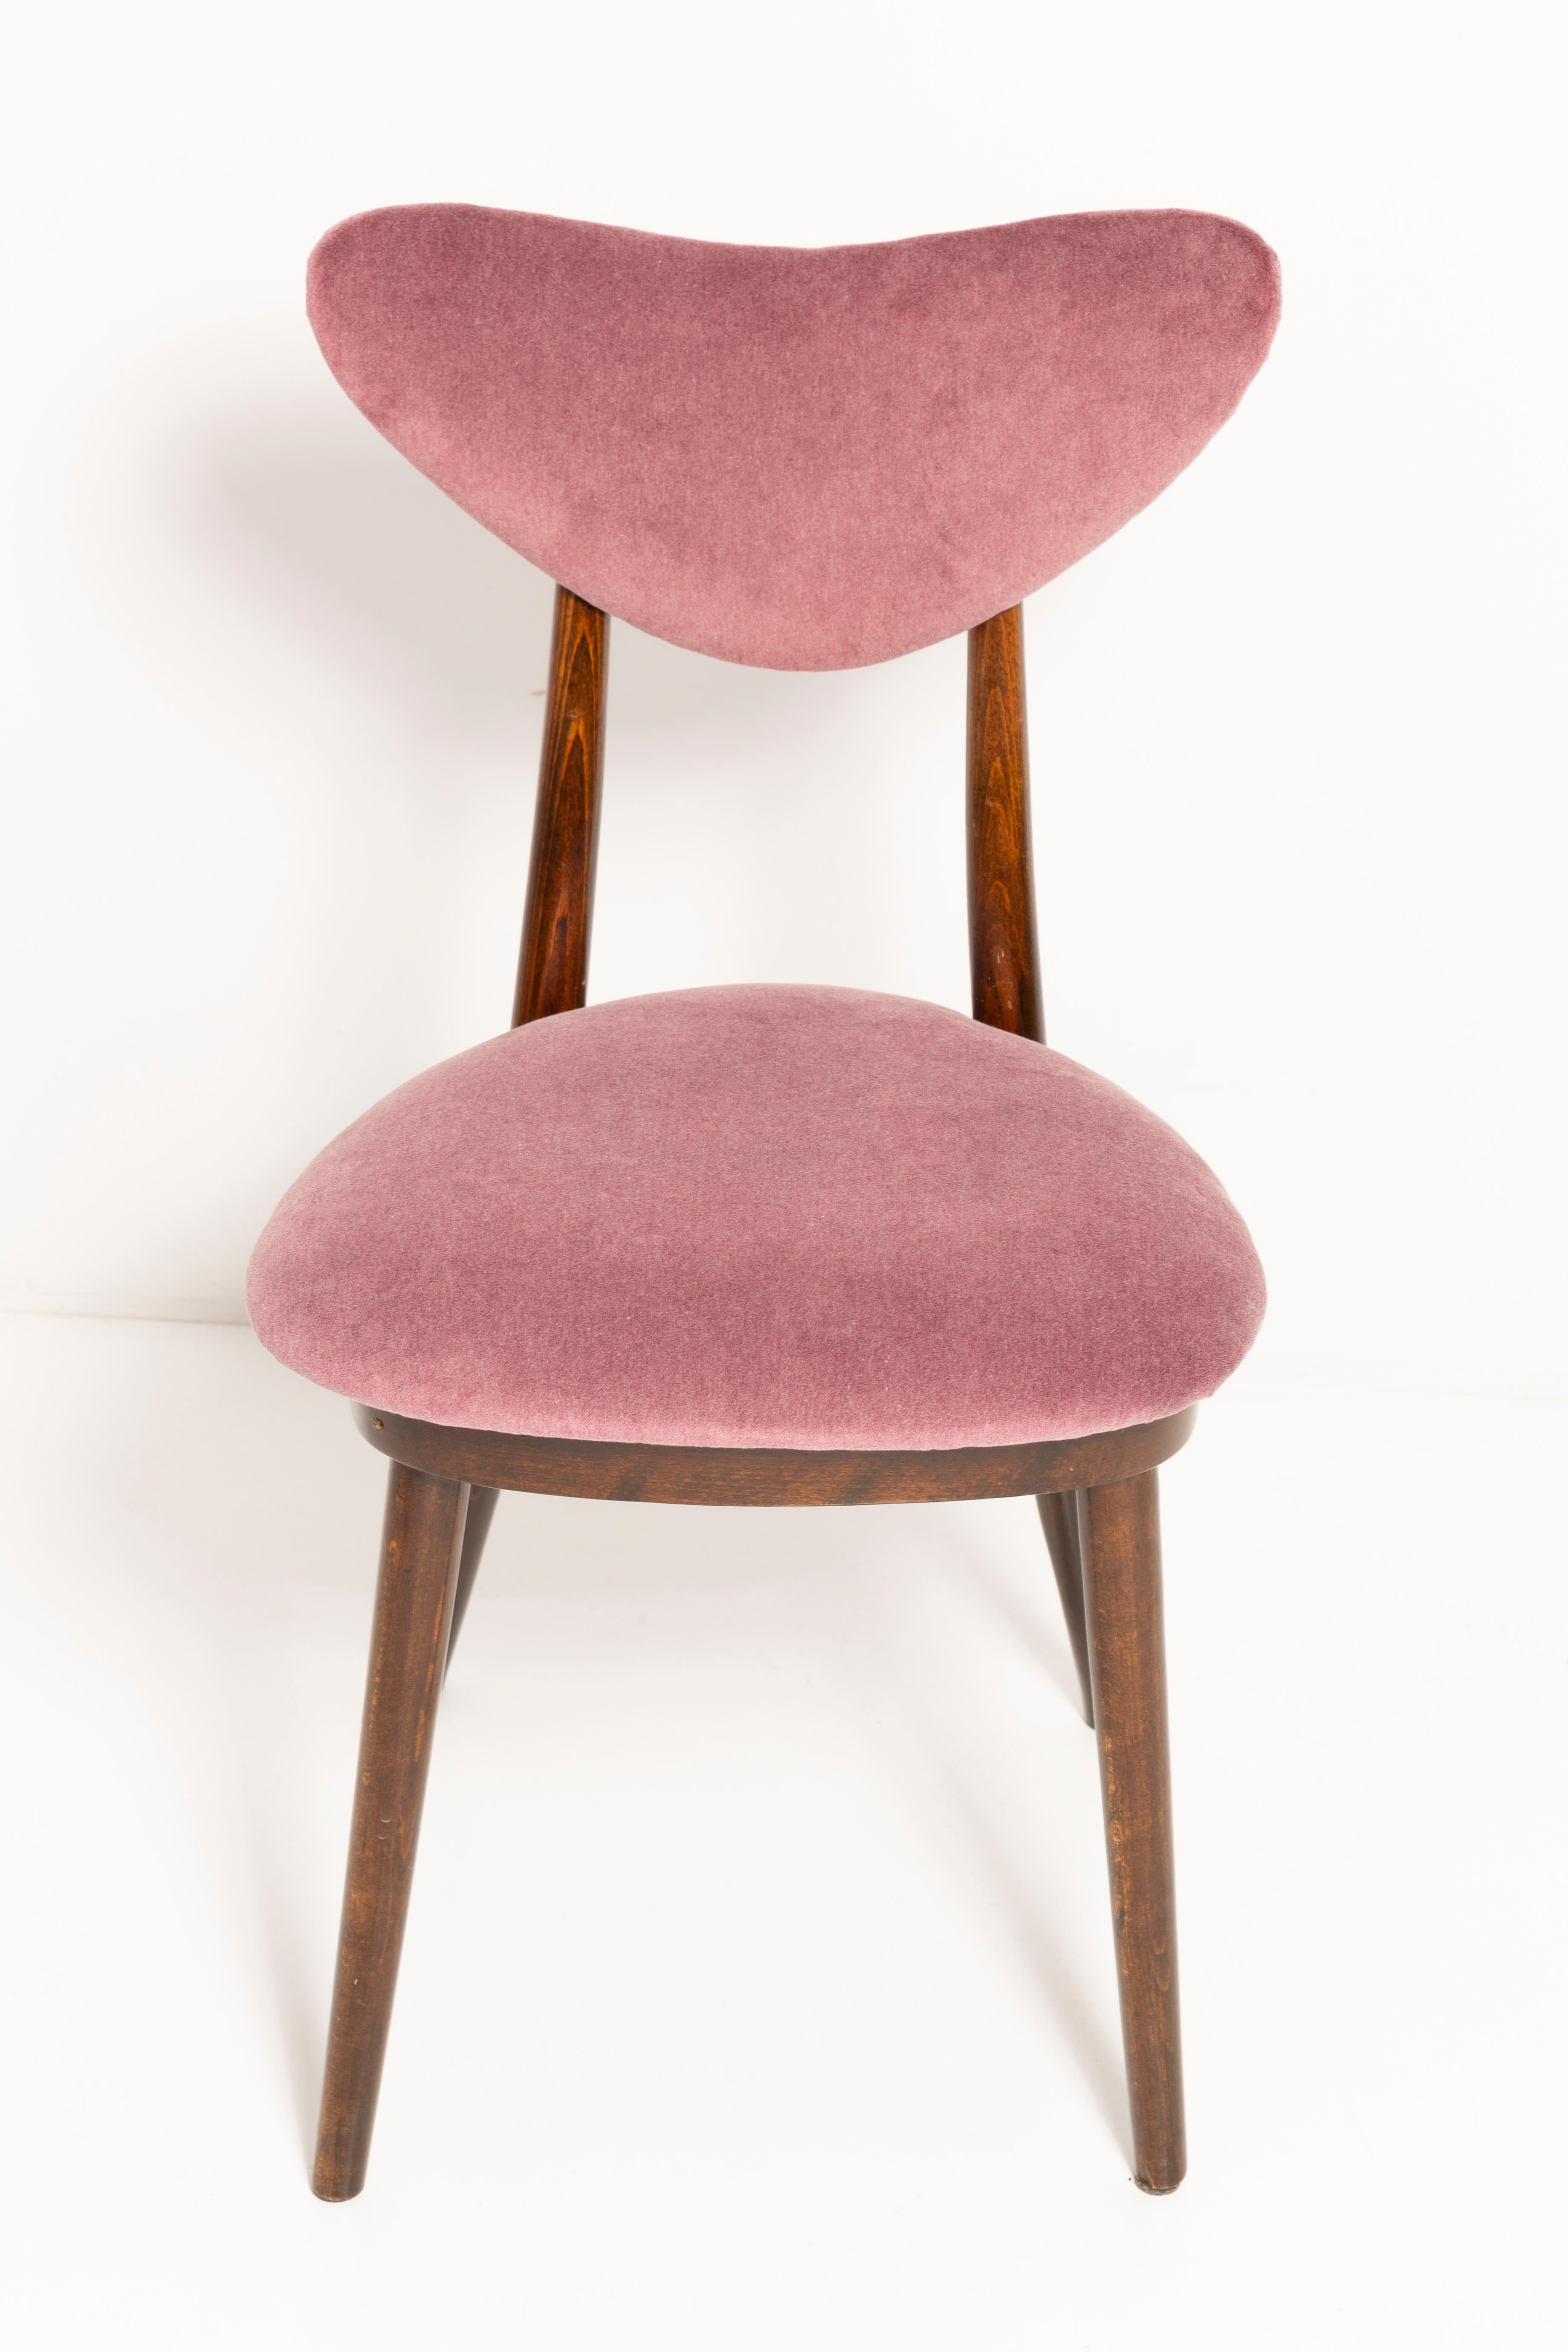 Woodwork Mid-Century Violet Burgundy Heart Cotton-Velvet Chair, Europe, 1960s For Sale